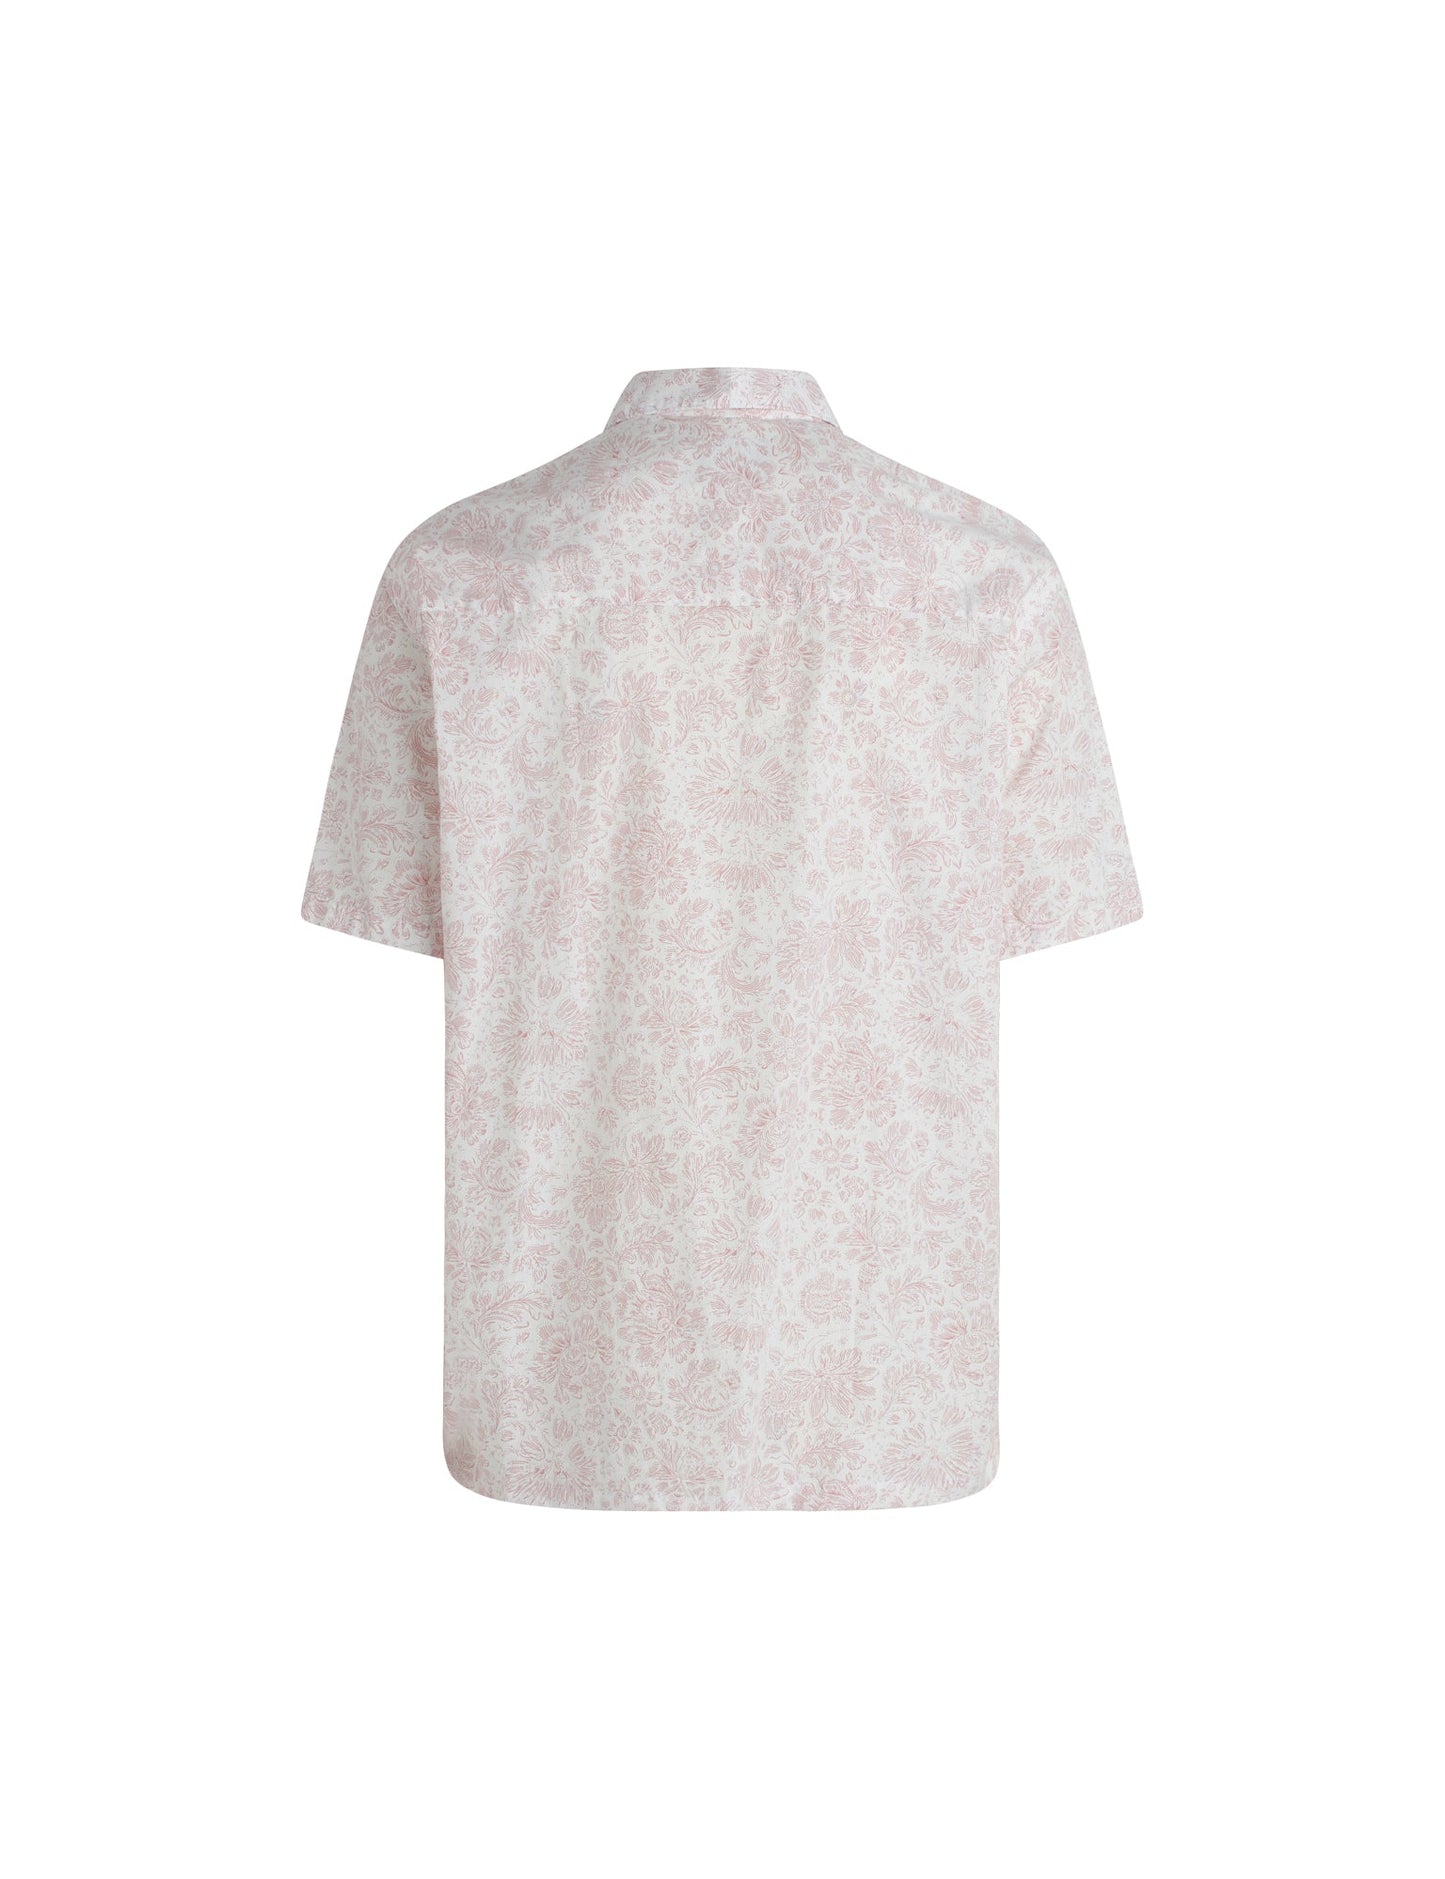 Japan Sako Shirt S/S,  Vanilla Ice/Nostalgia Rose